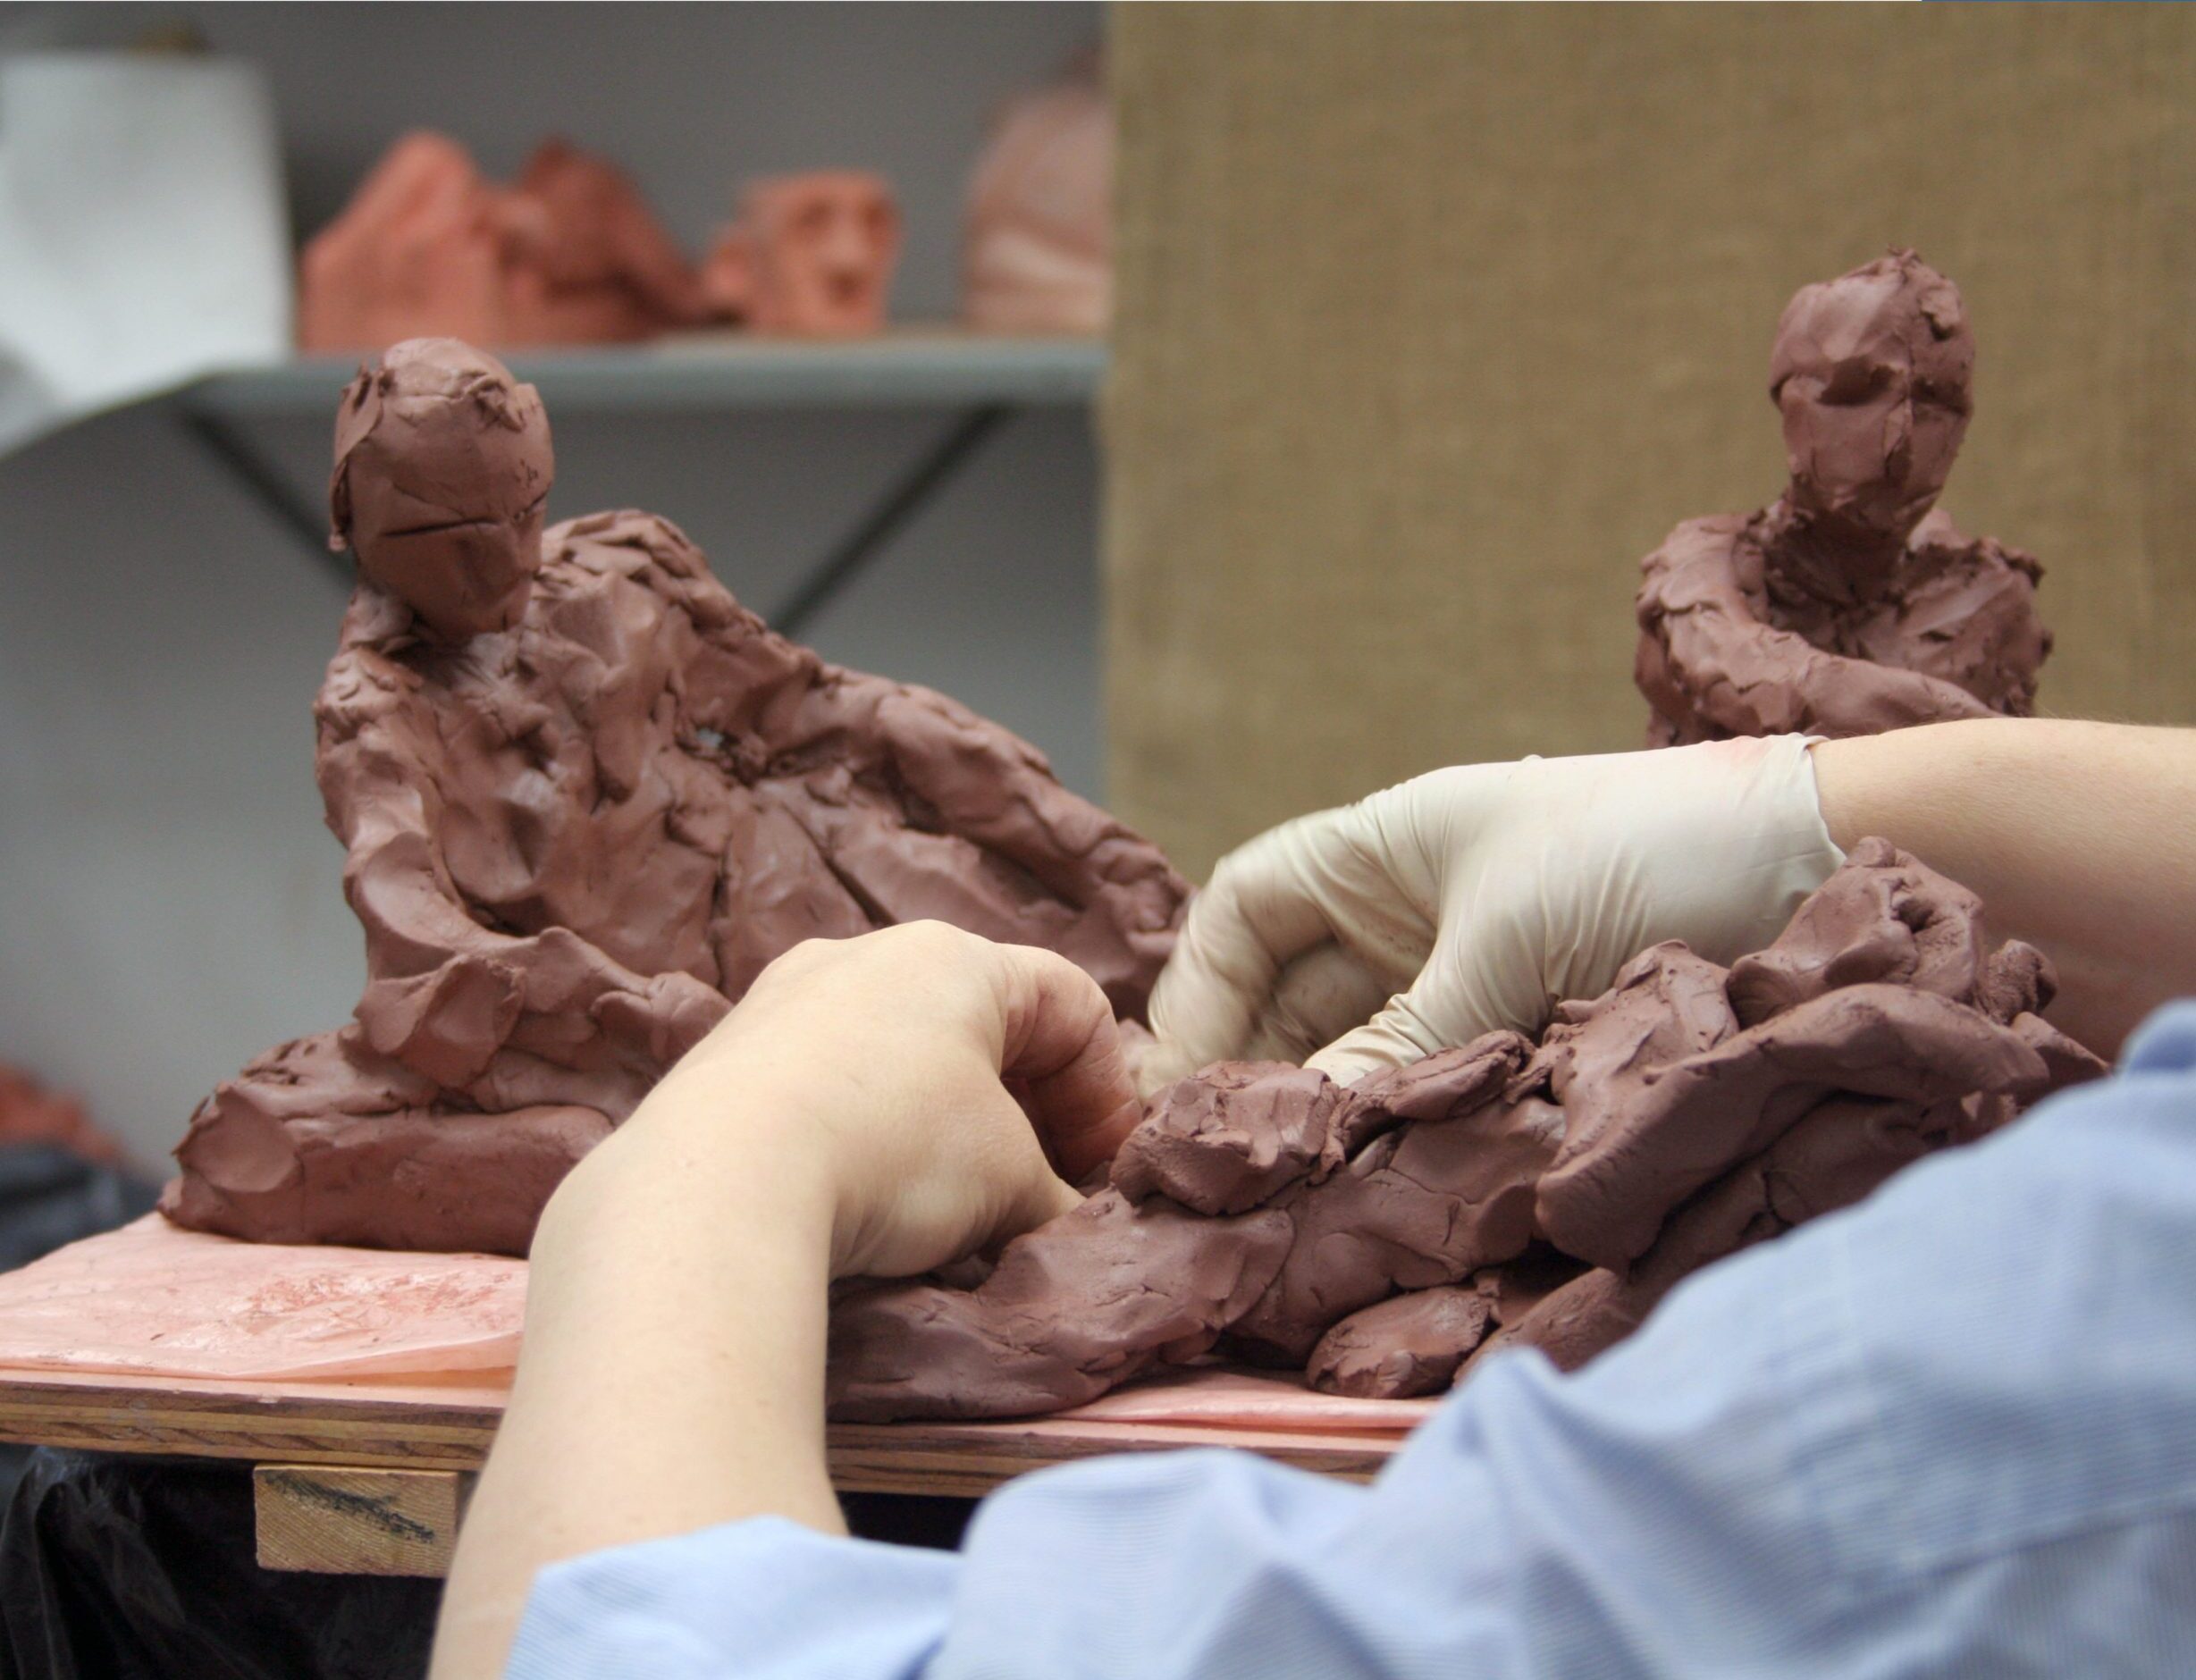 Hands sculpting a figure in clay